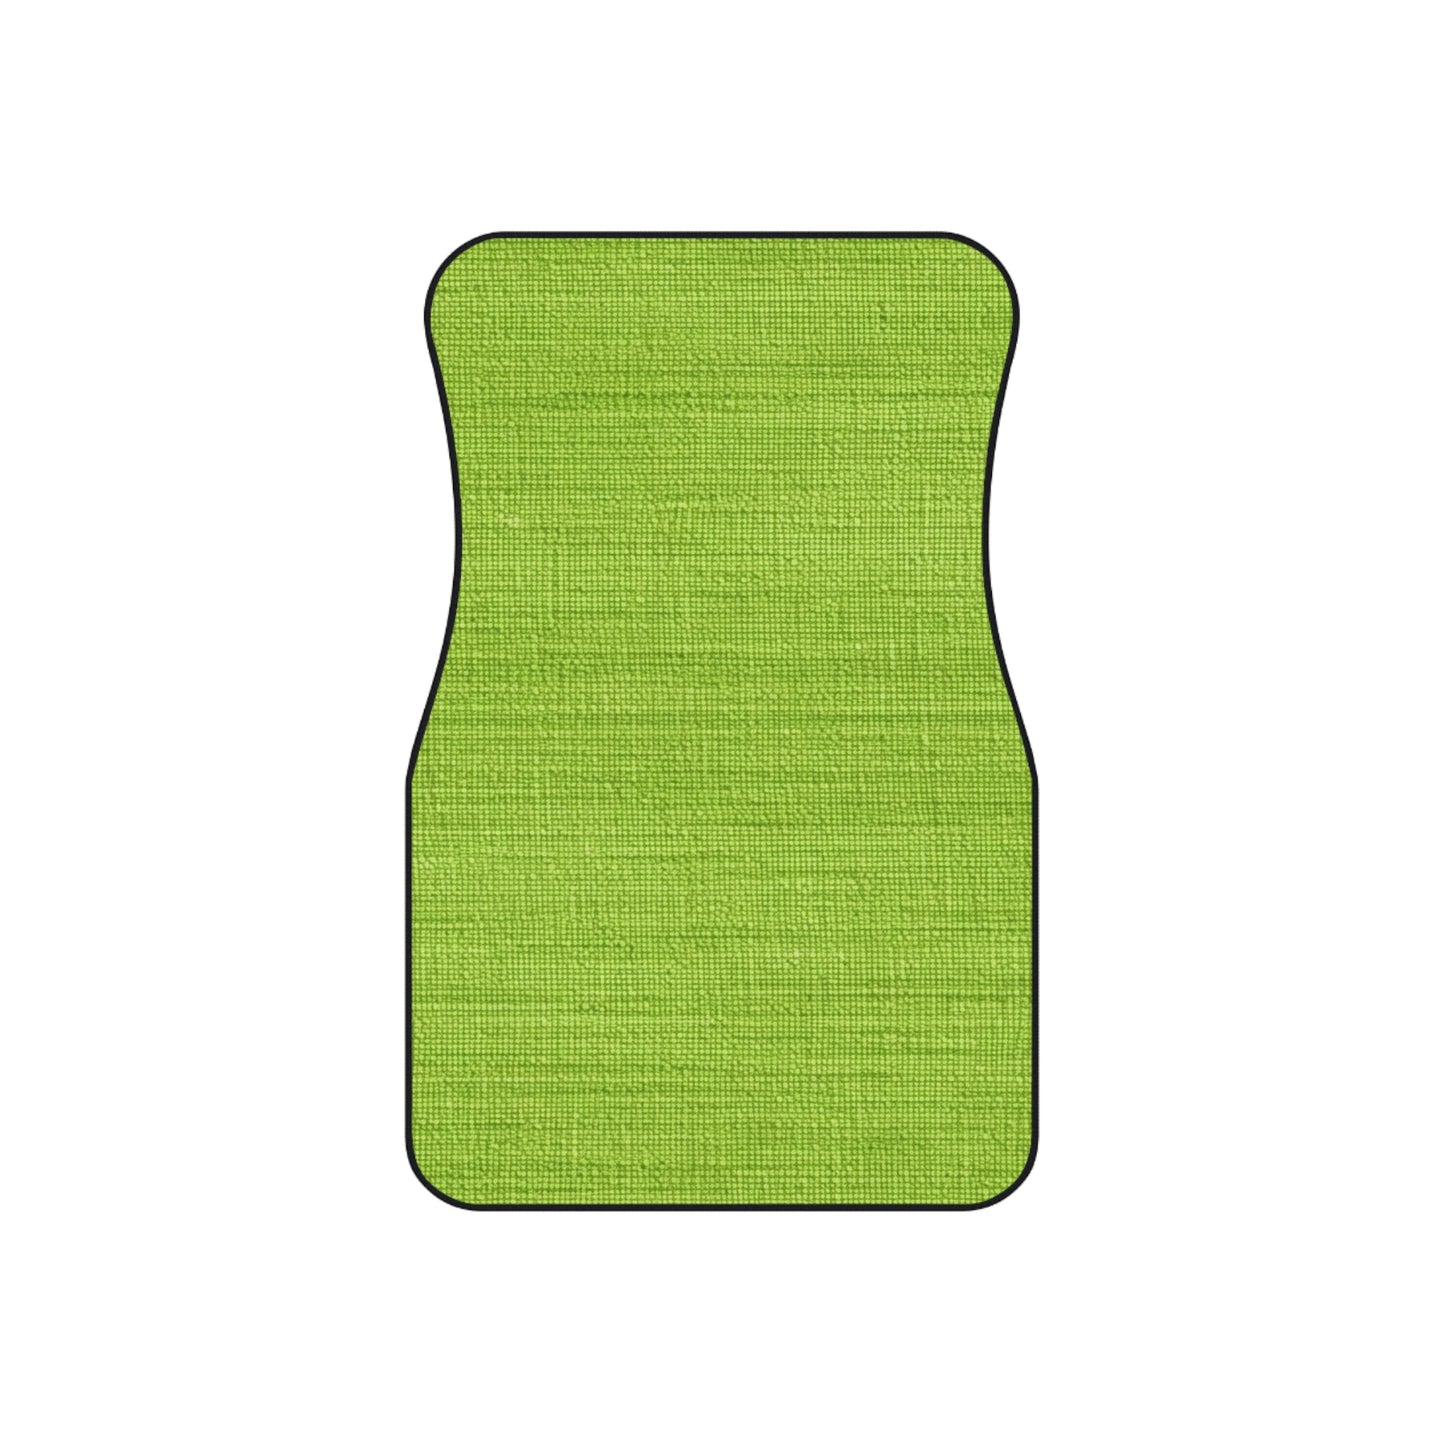 Lush Grass Neon Green: Denim-Inspired, Springtime Fabric Style - Car Mats (Set of 4)